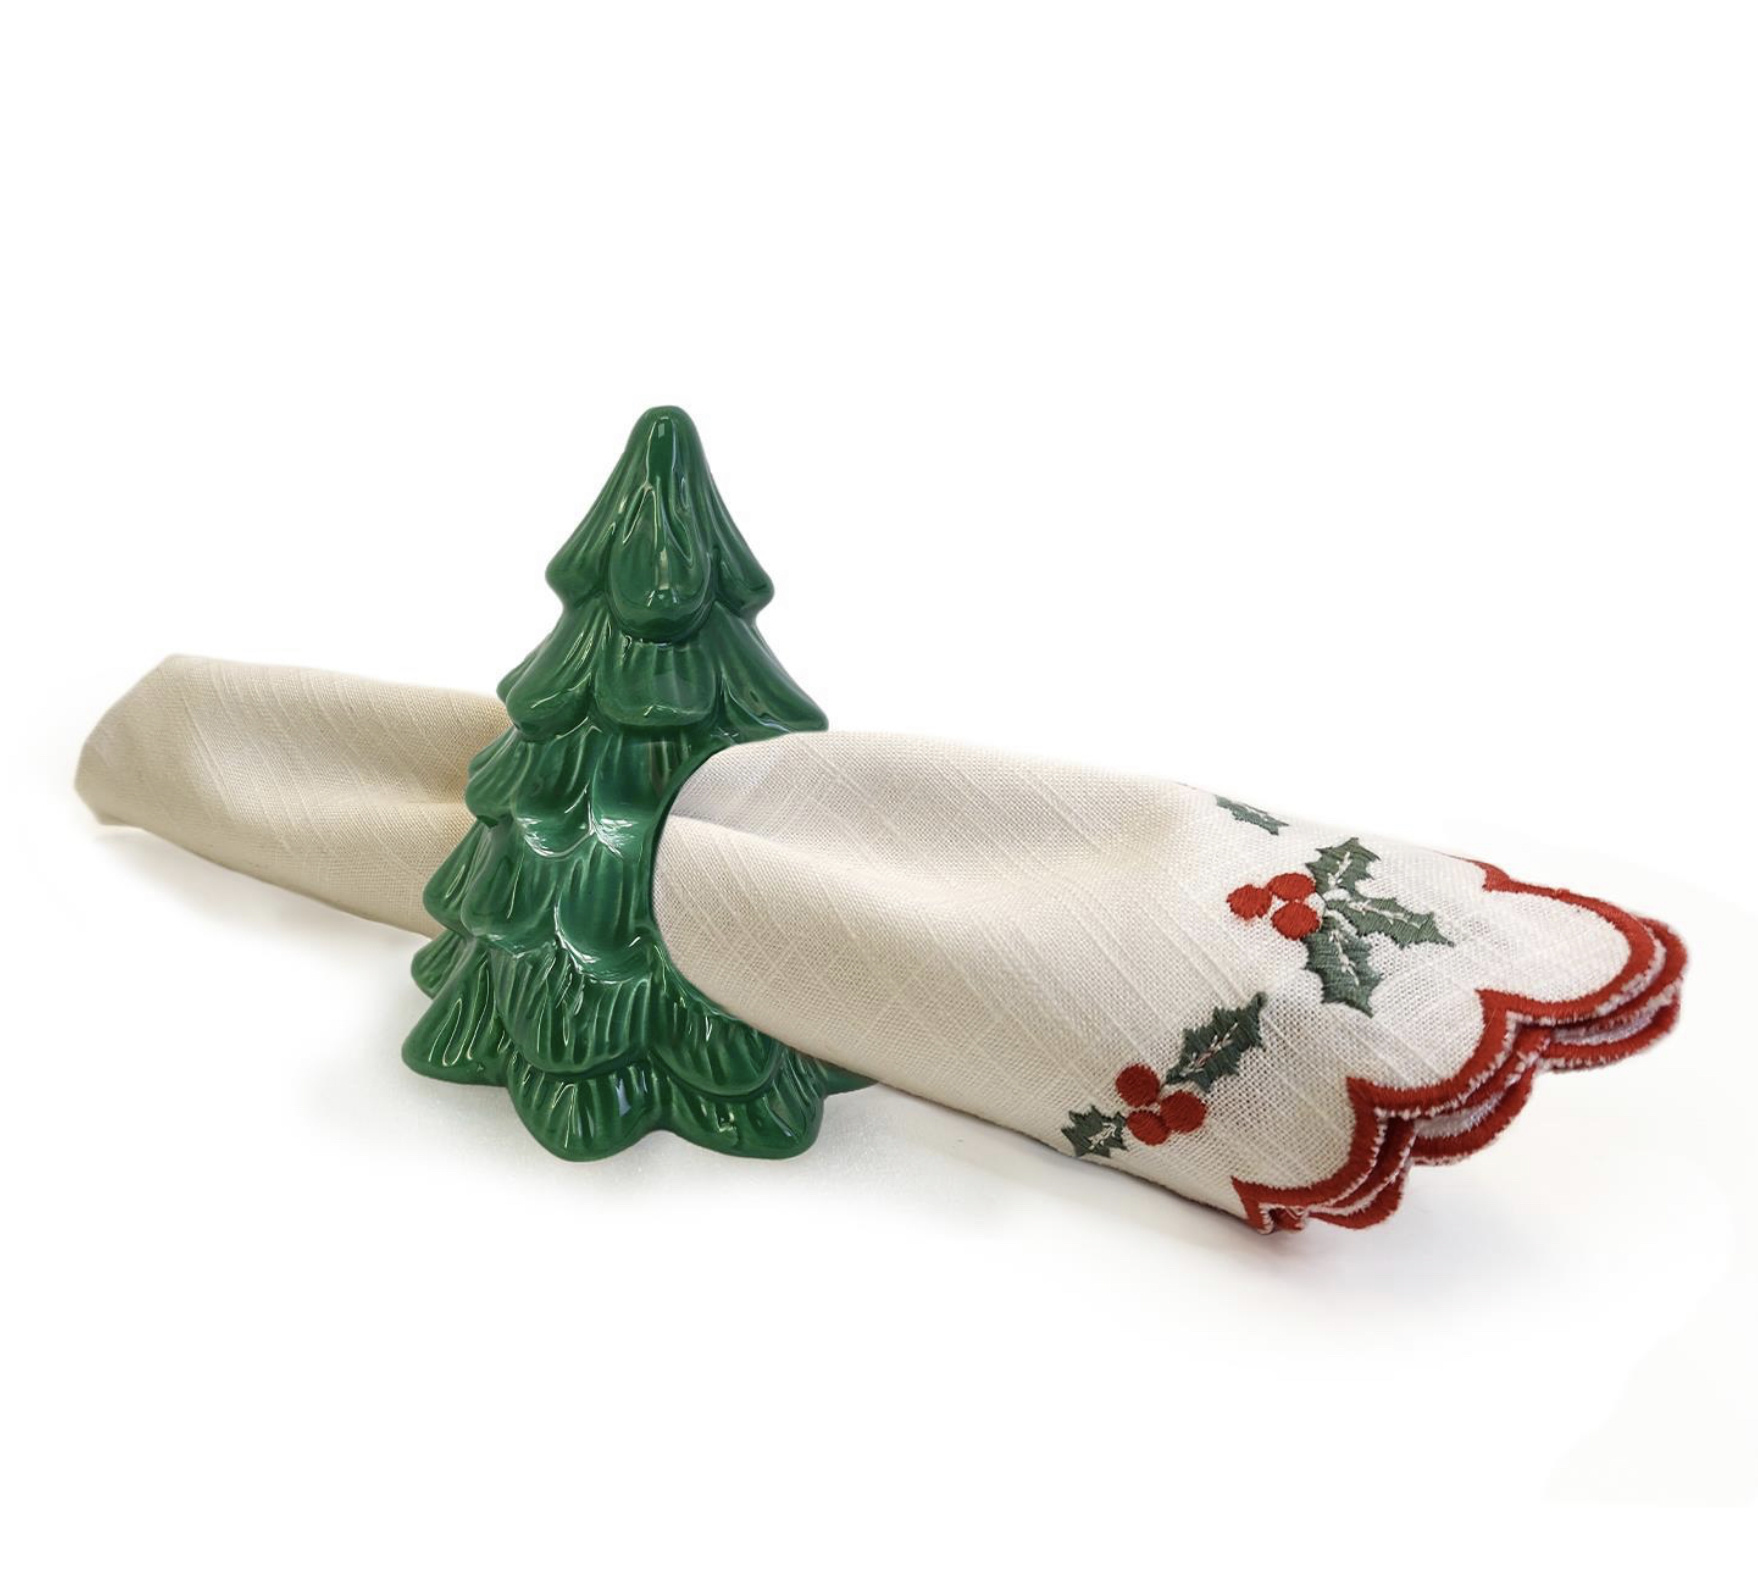 Two's Company Joy and Merriment Vintage Christmas Tree Napkin Ring